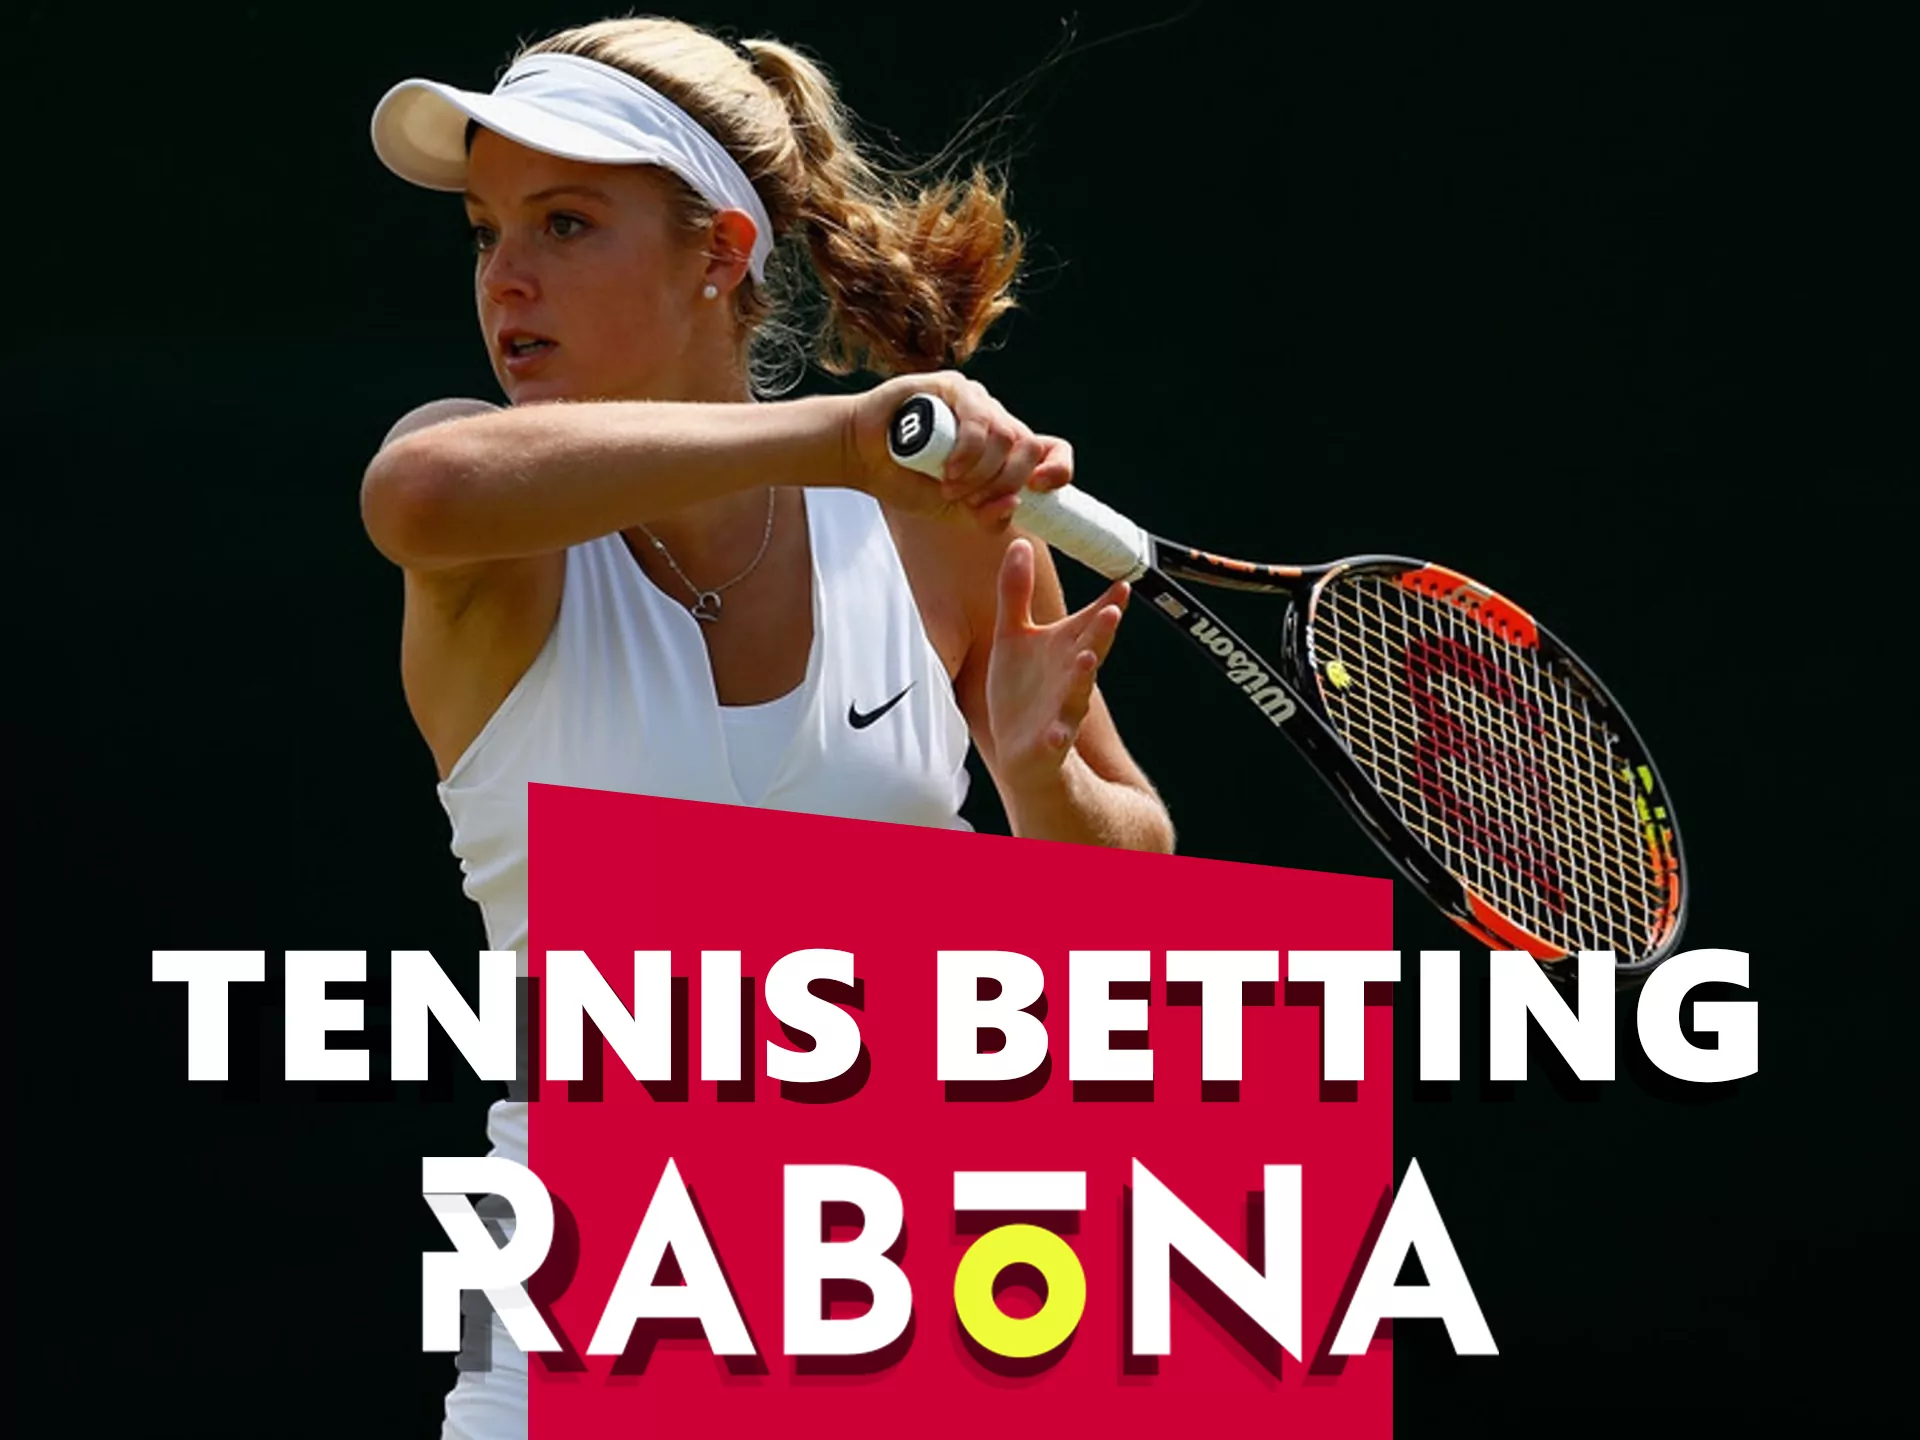 Tennis betting on Rabona.